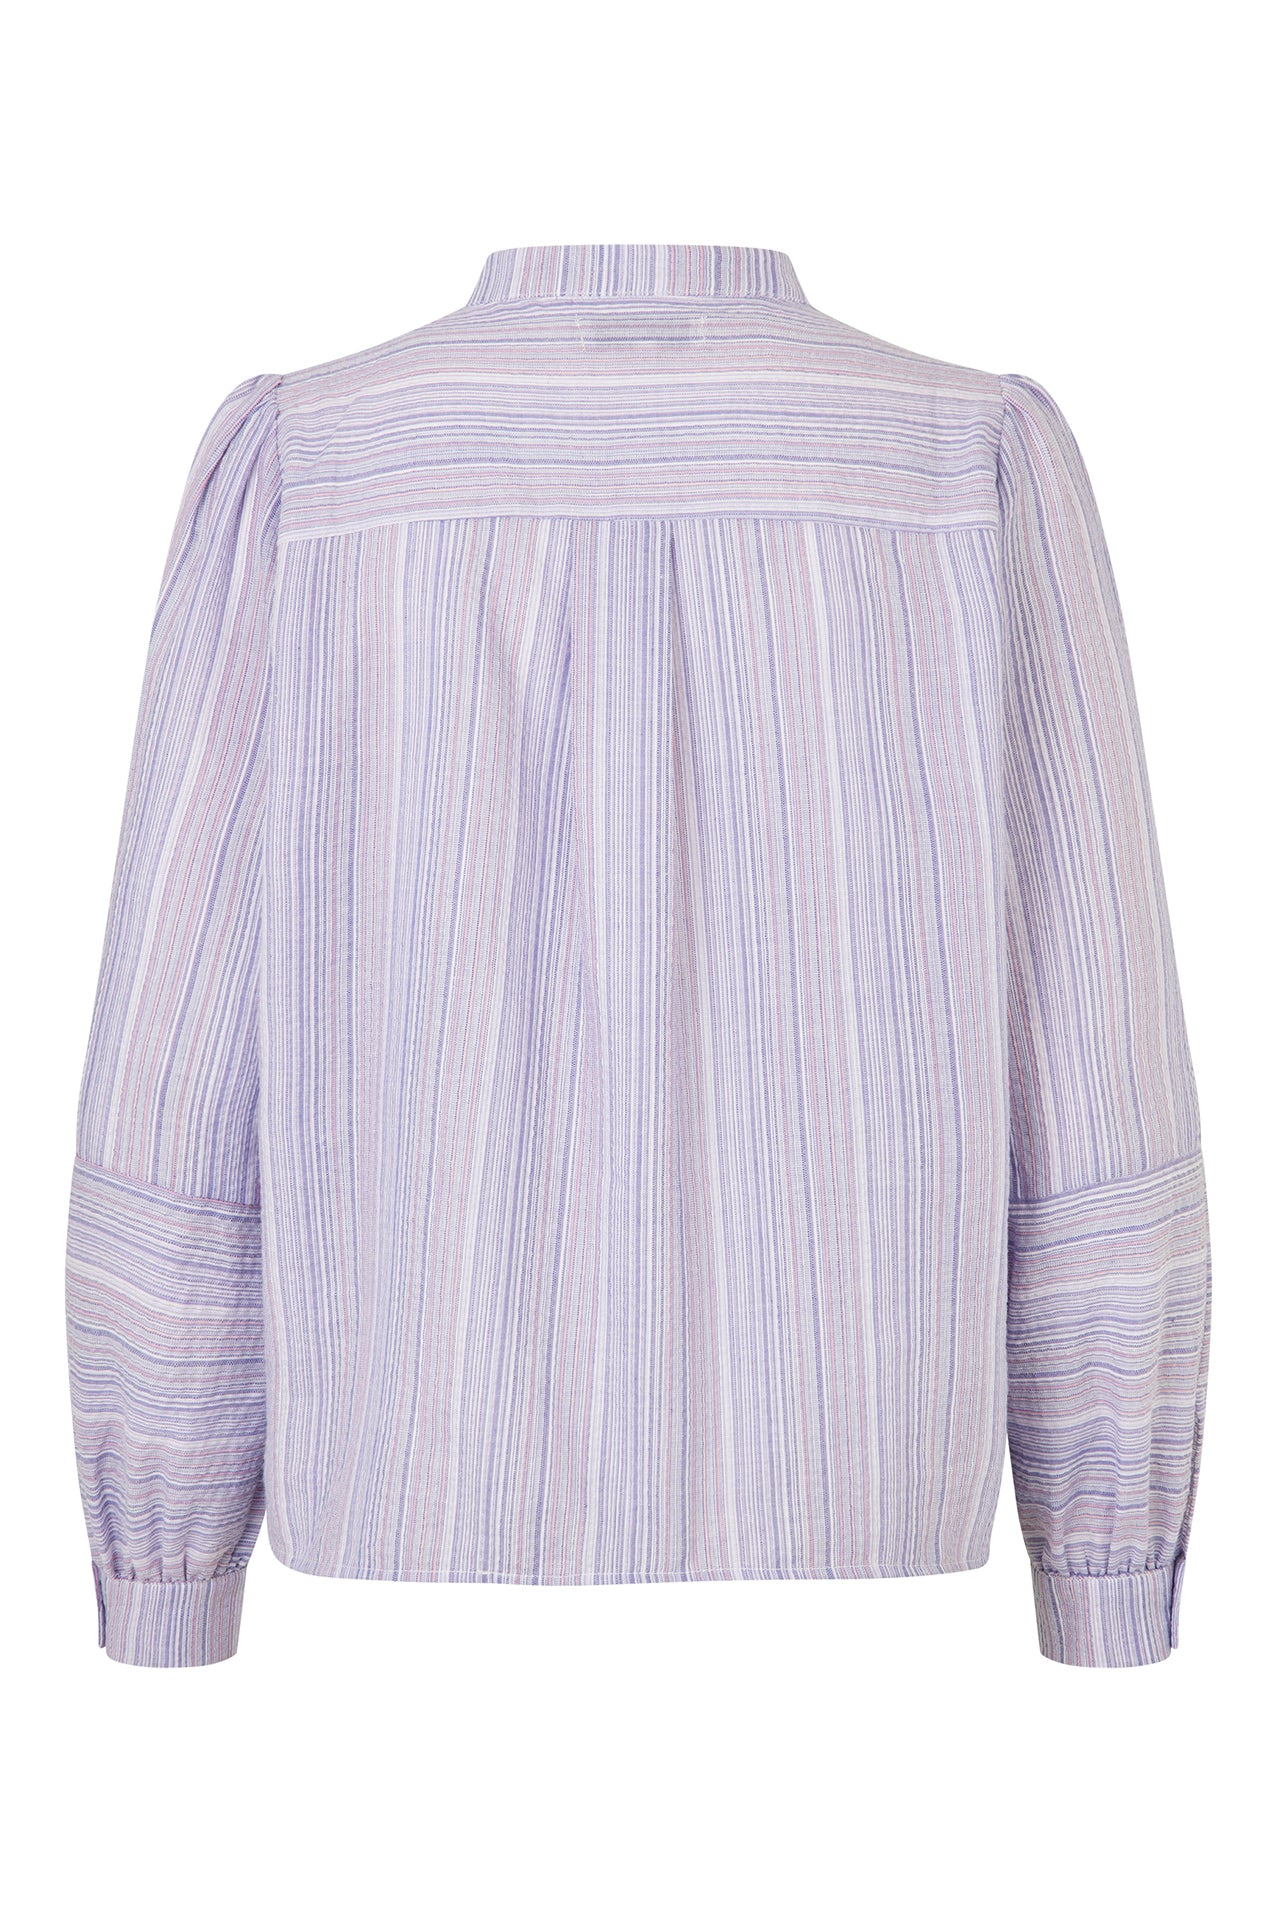 Lollys Laundry LinaLL Shirt LS Shirt 80 Stripe